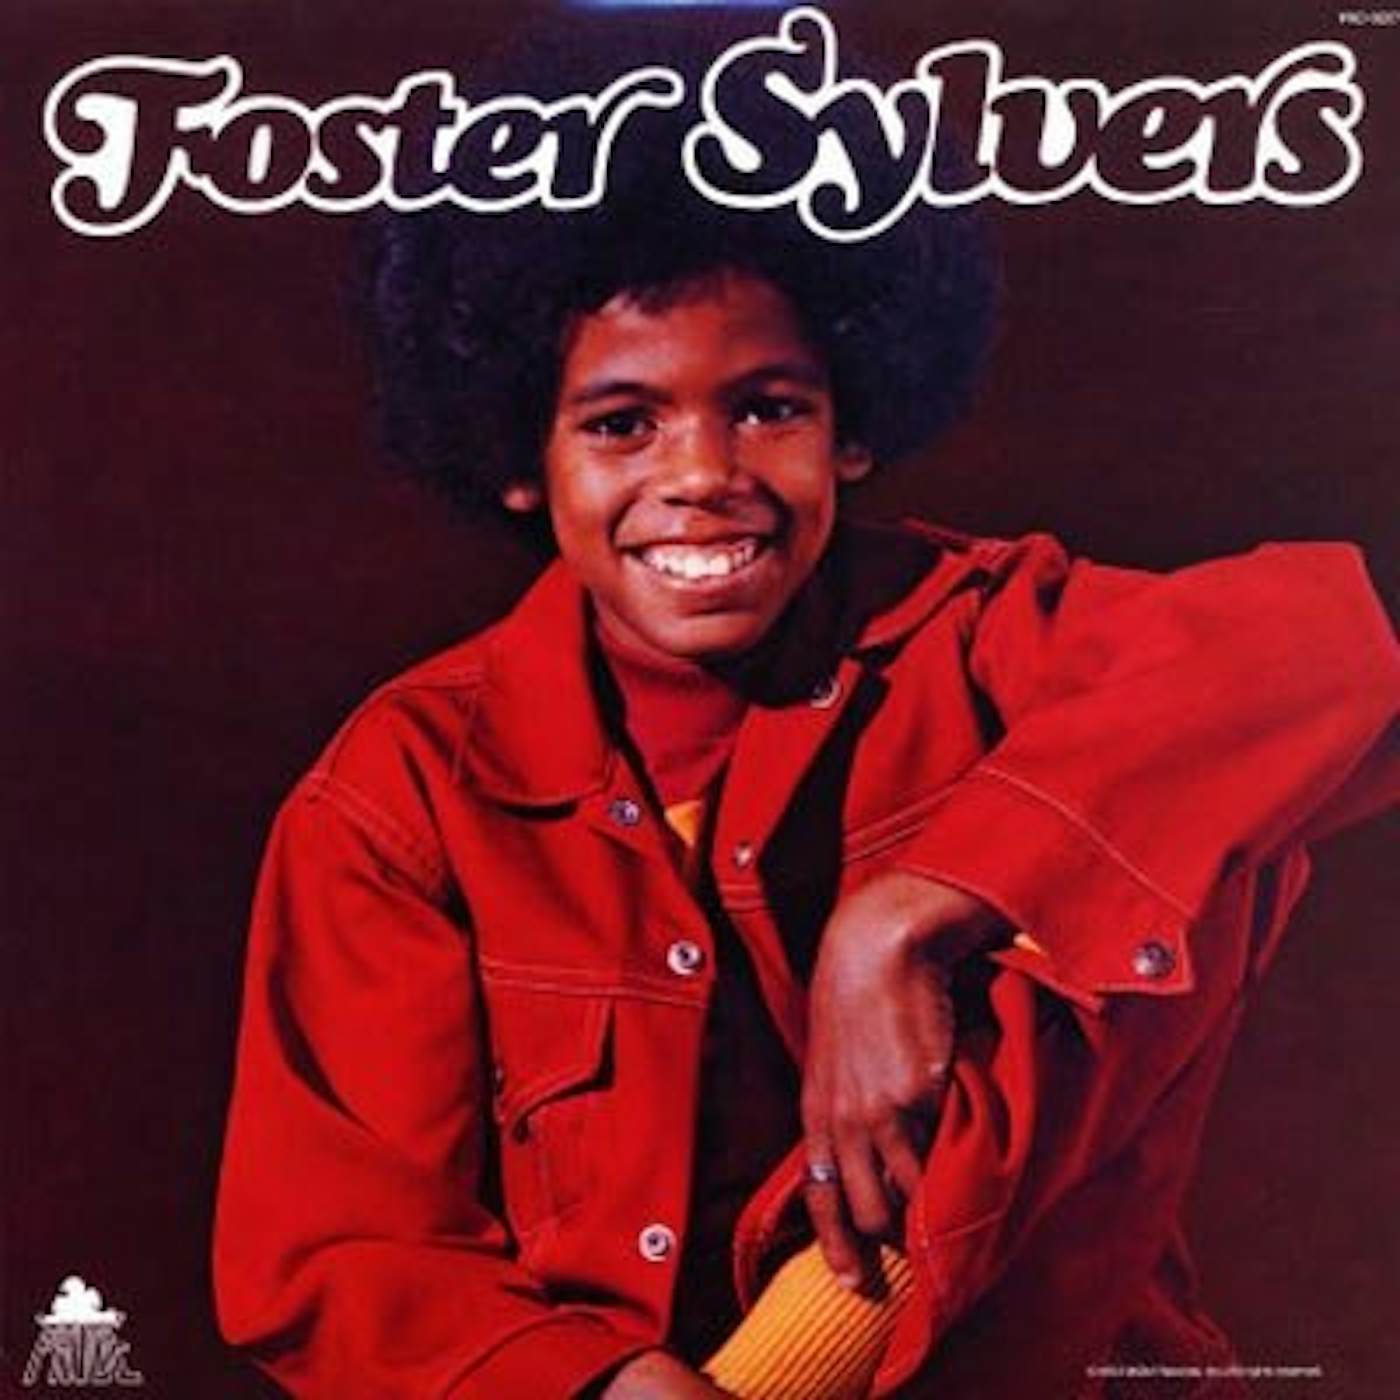 Foster Sylvers Vinyl Record